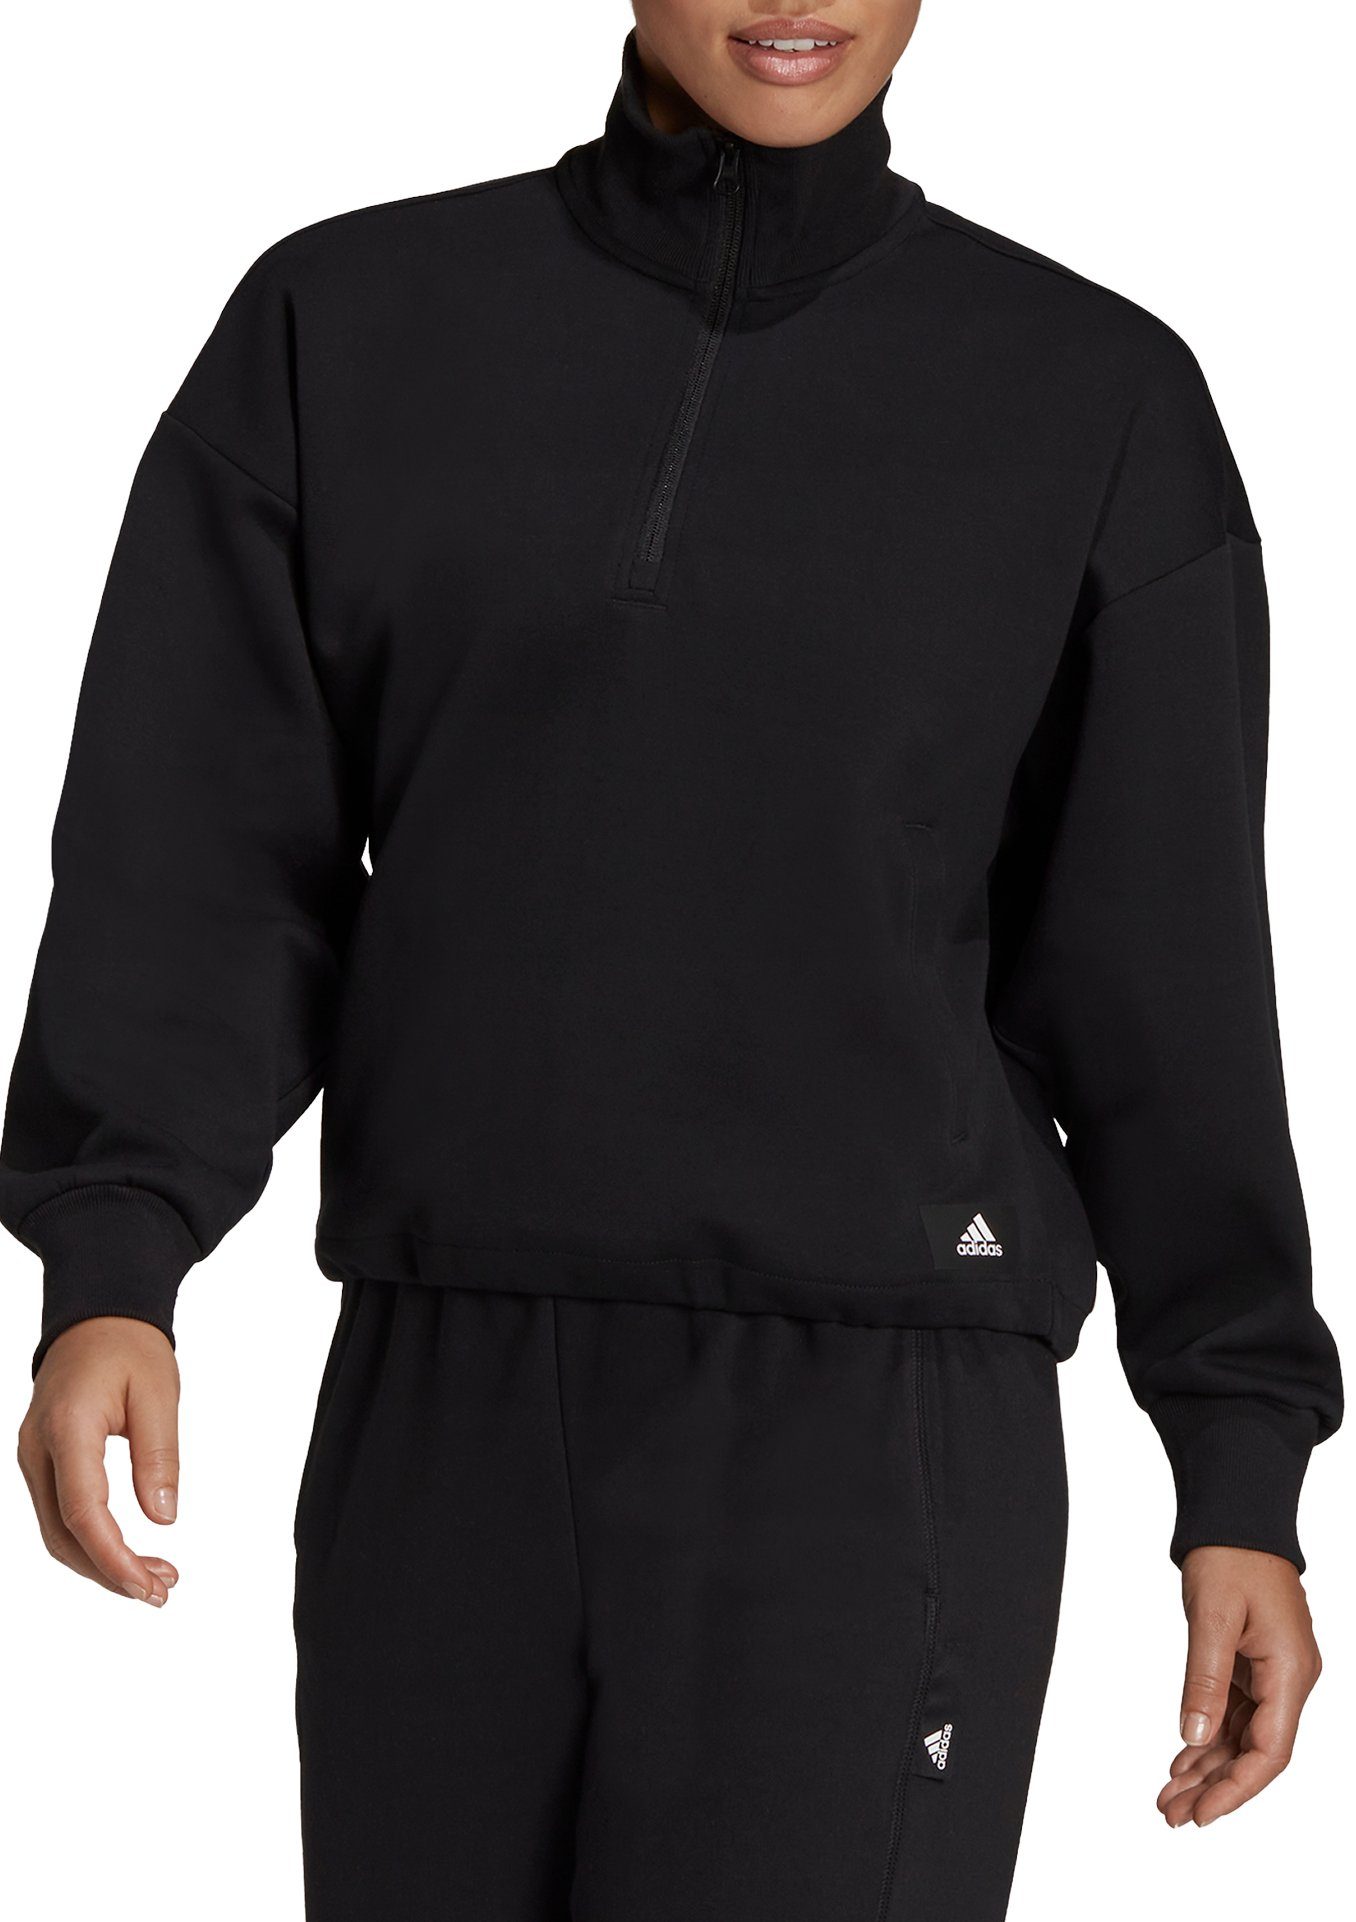 3B FI BLACK schwarz W Sweatshirt Sportswear adidas QZ